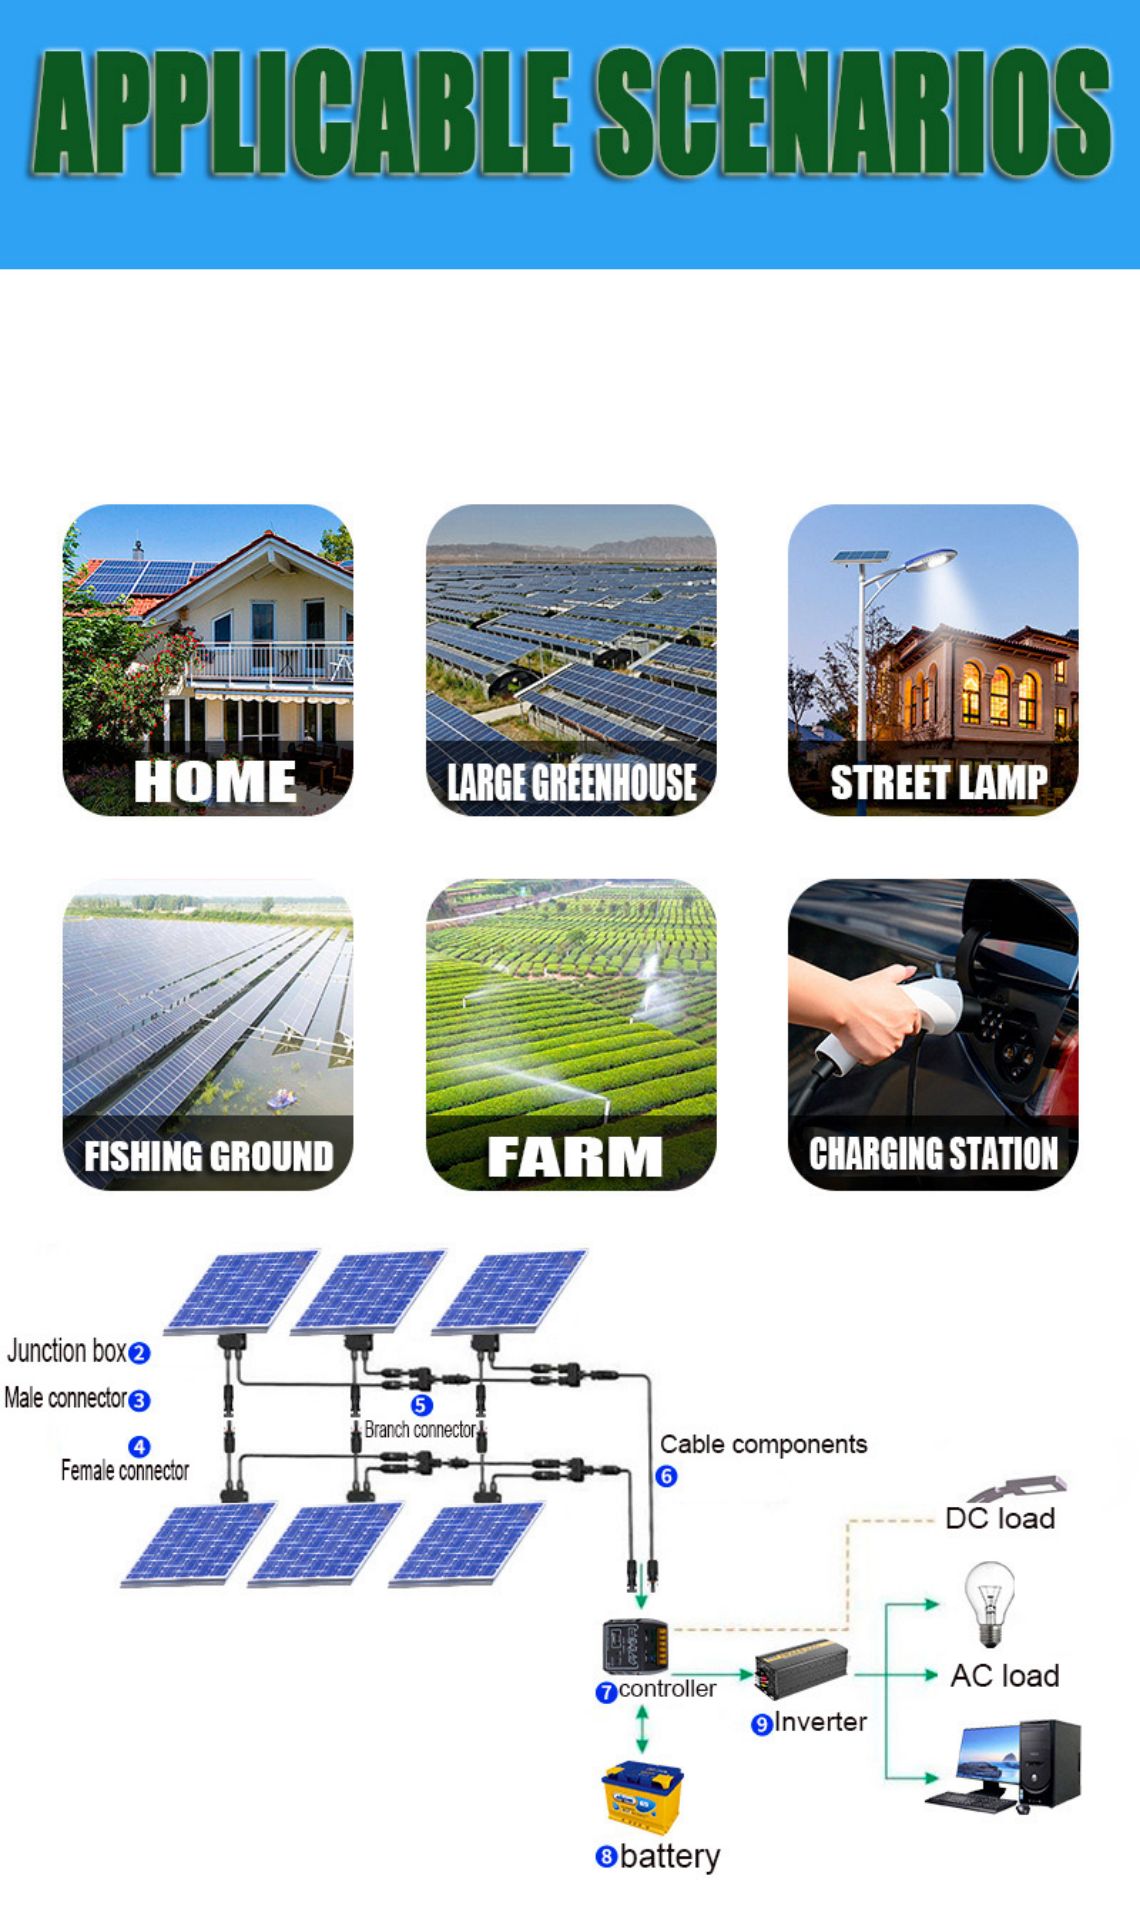 Photovoltaic connectors